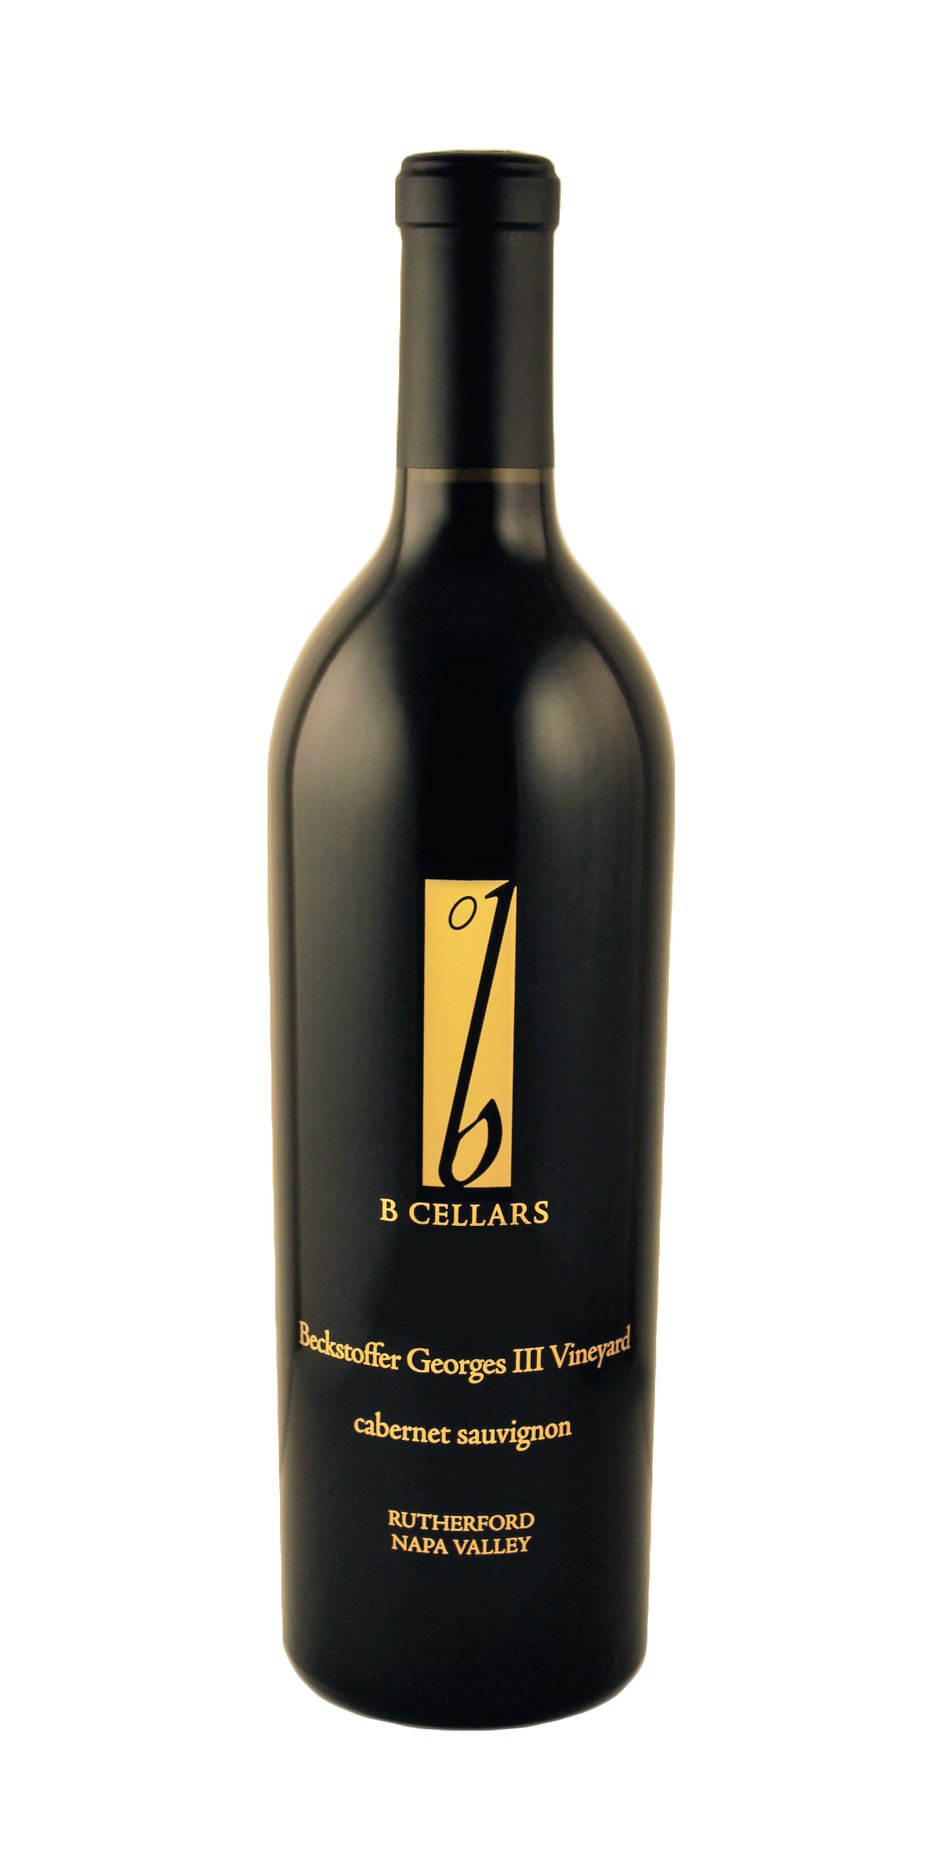 B Cellars – Cabernet Sauvignon 2015, Beckstoffer George III Vineyard – Rutherford, Napa Valley